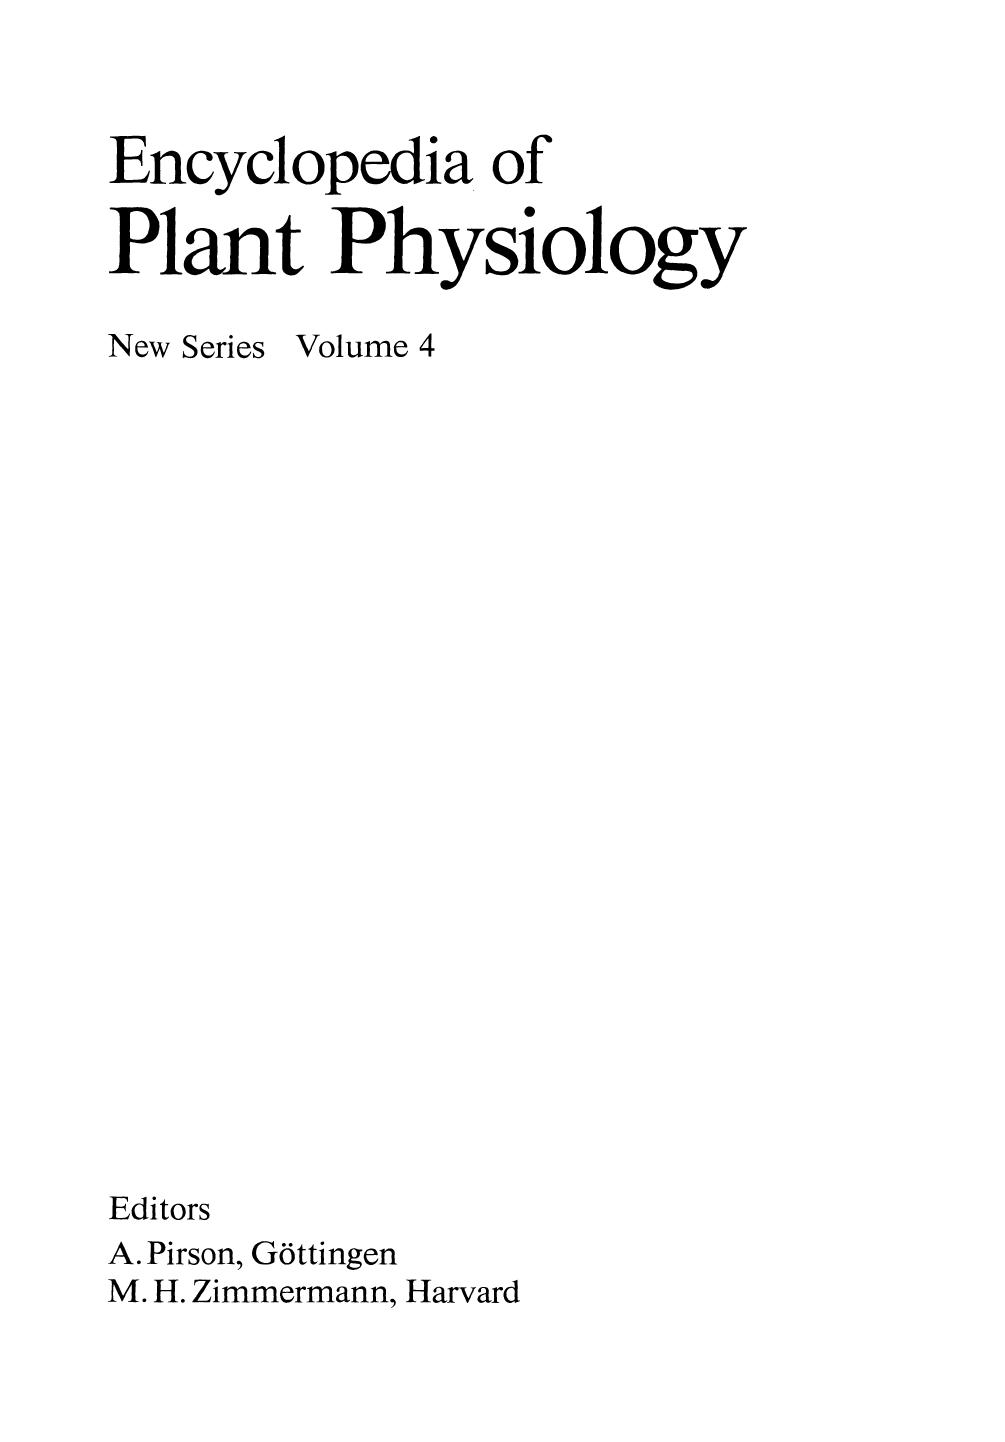 Physiological Plant Pathology ( PDFDrive ), 1976